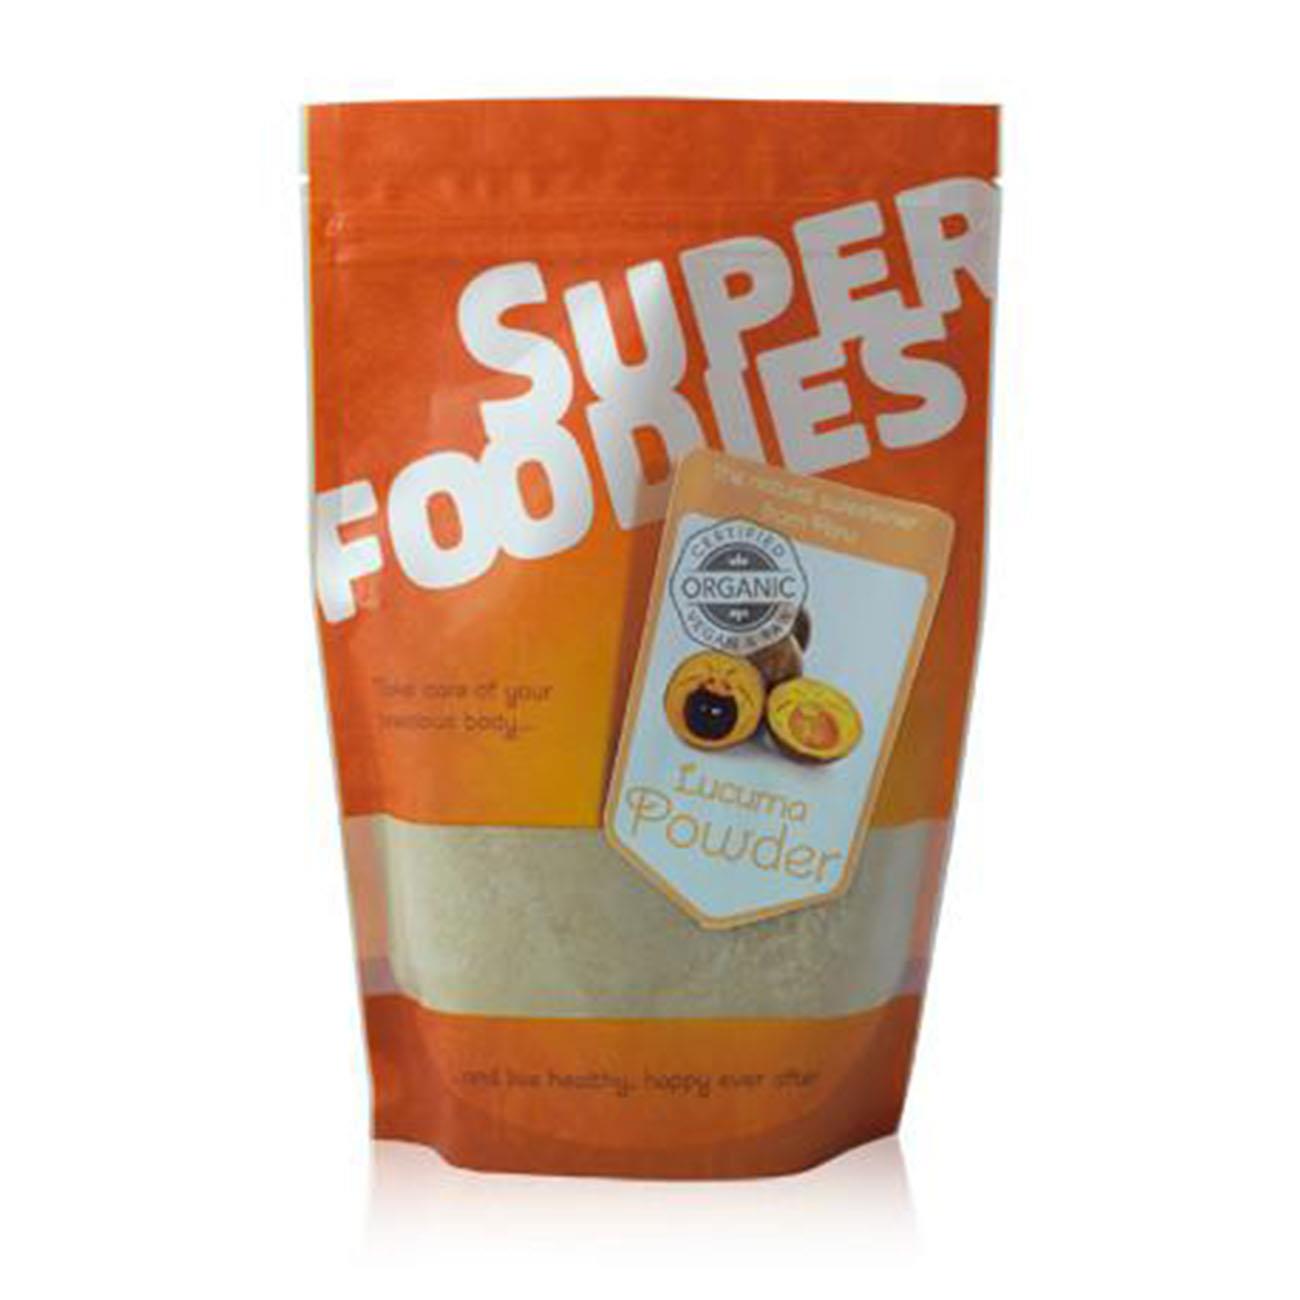 Superfoodies Organic Lucuma Powder 100g